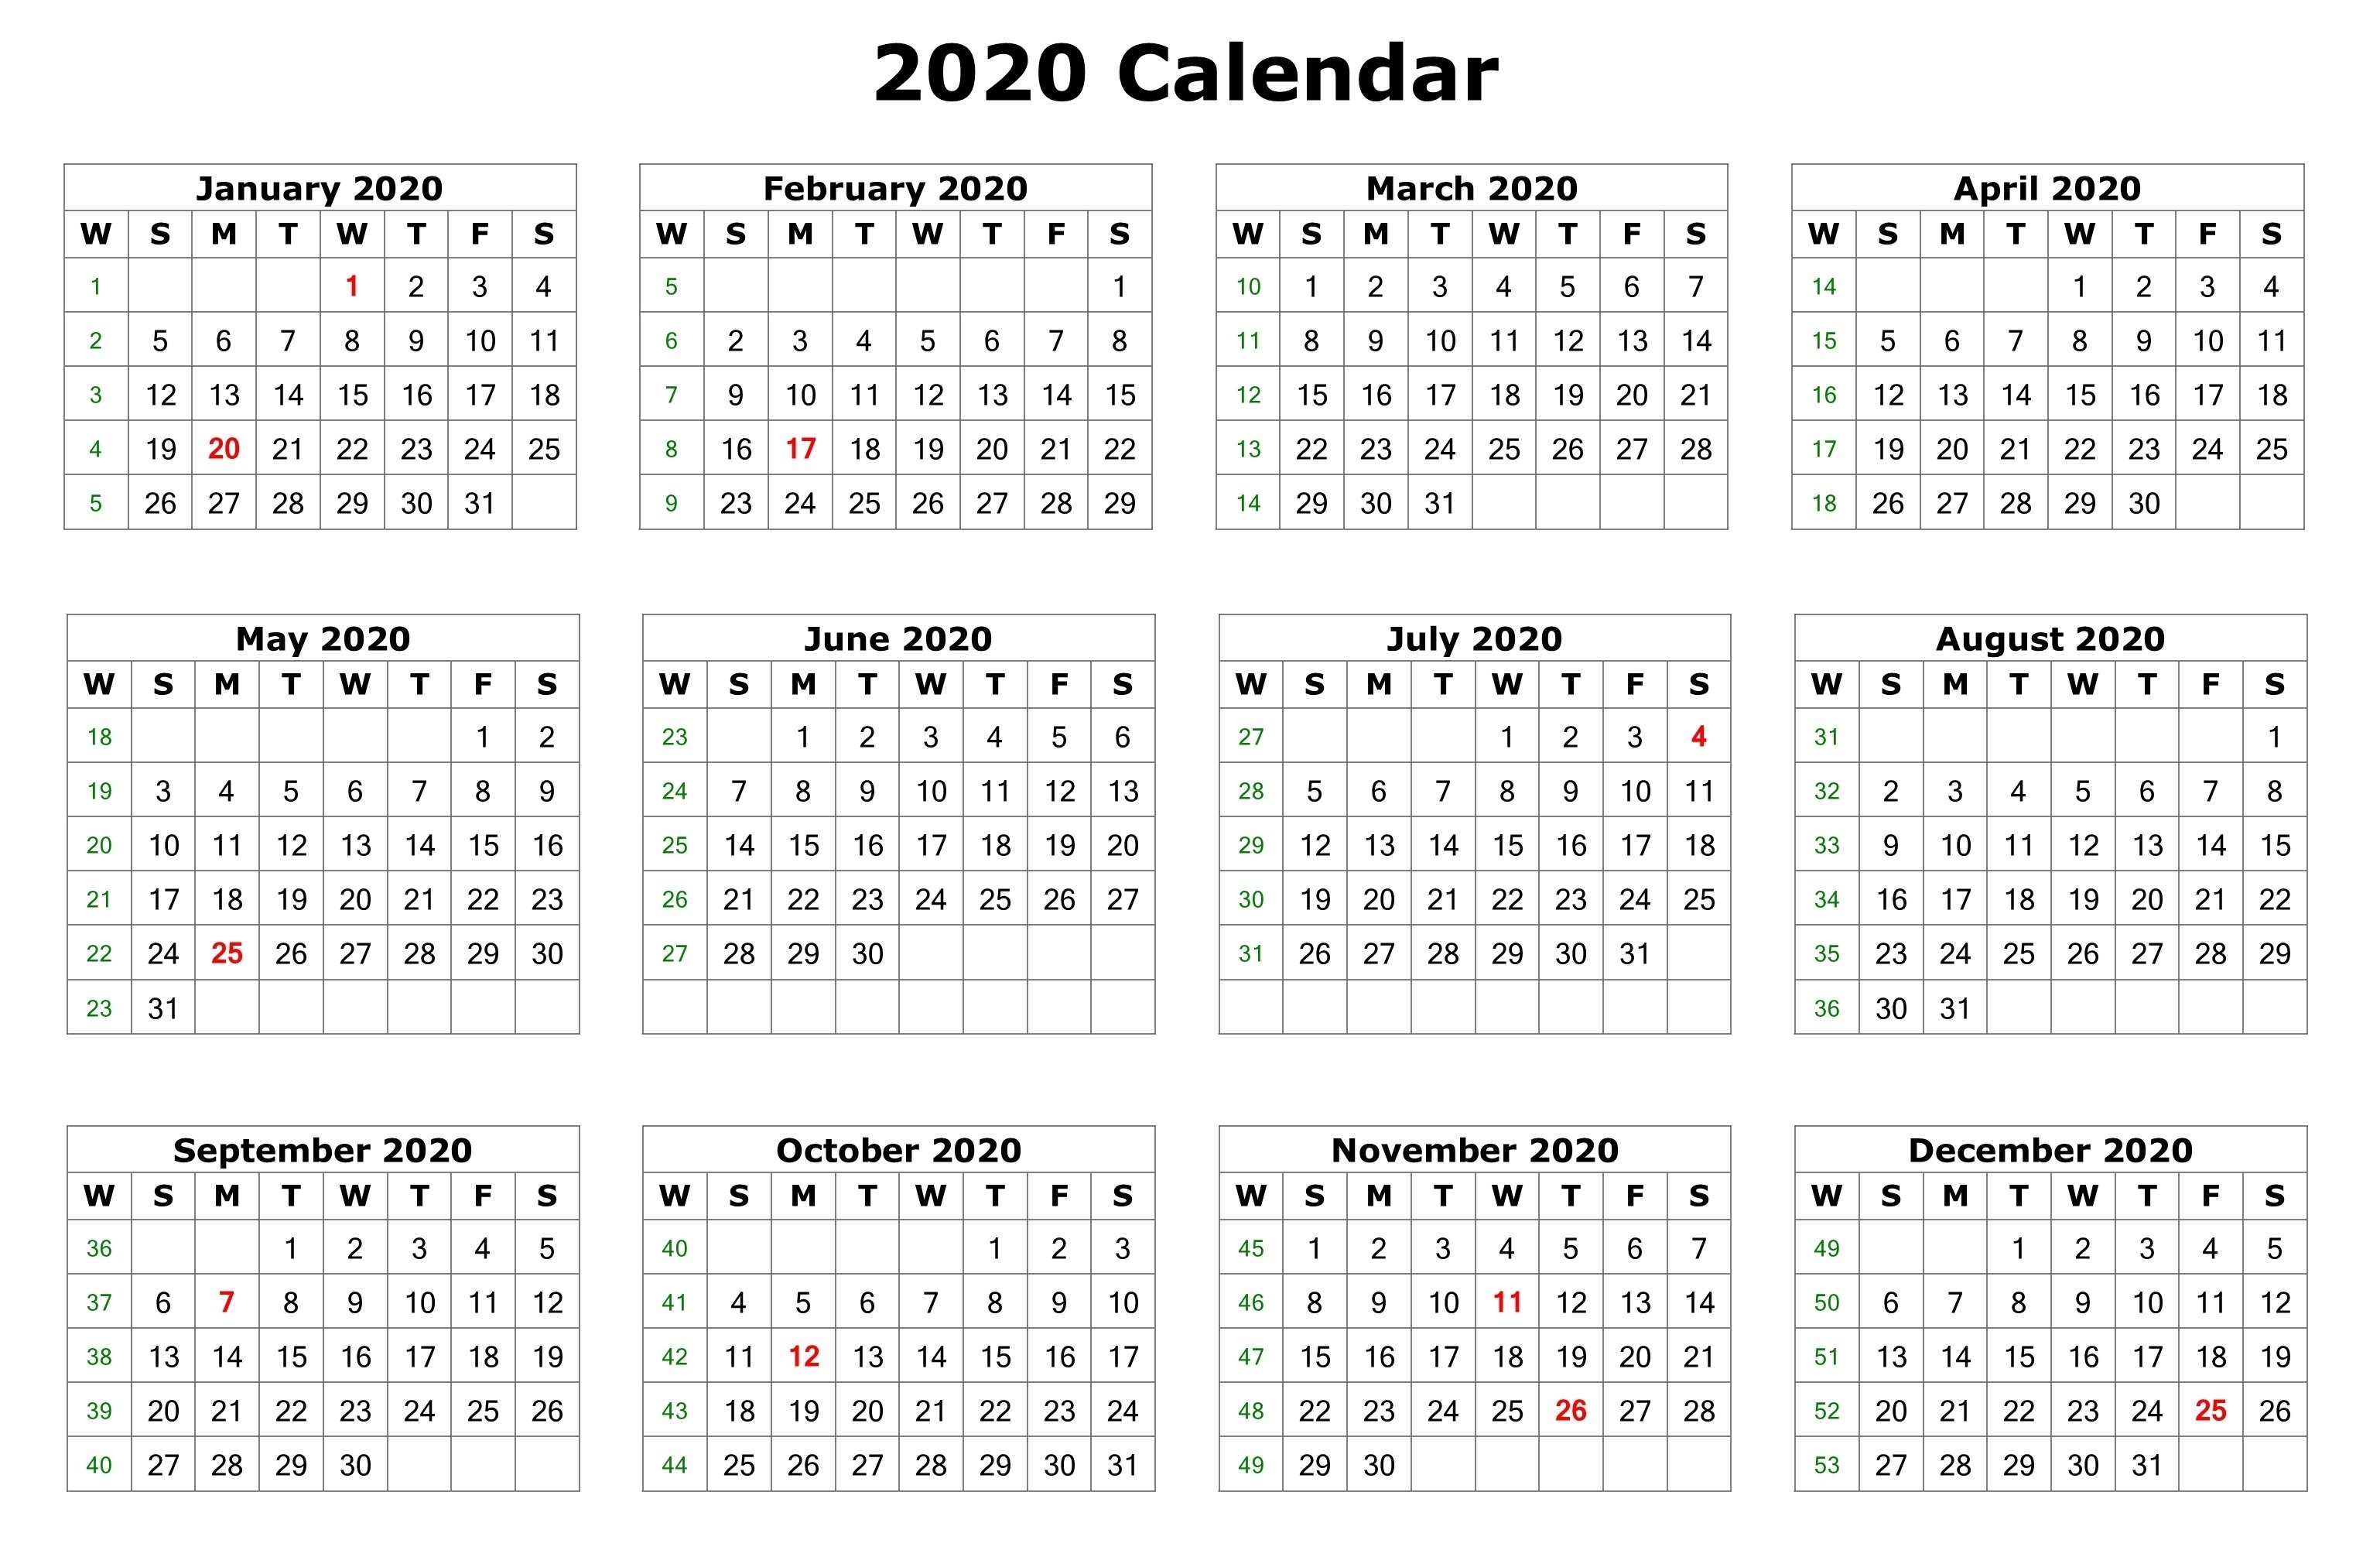 2020 One Page Calendar Printable | Calendar 2020 2020 Calendar One Page